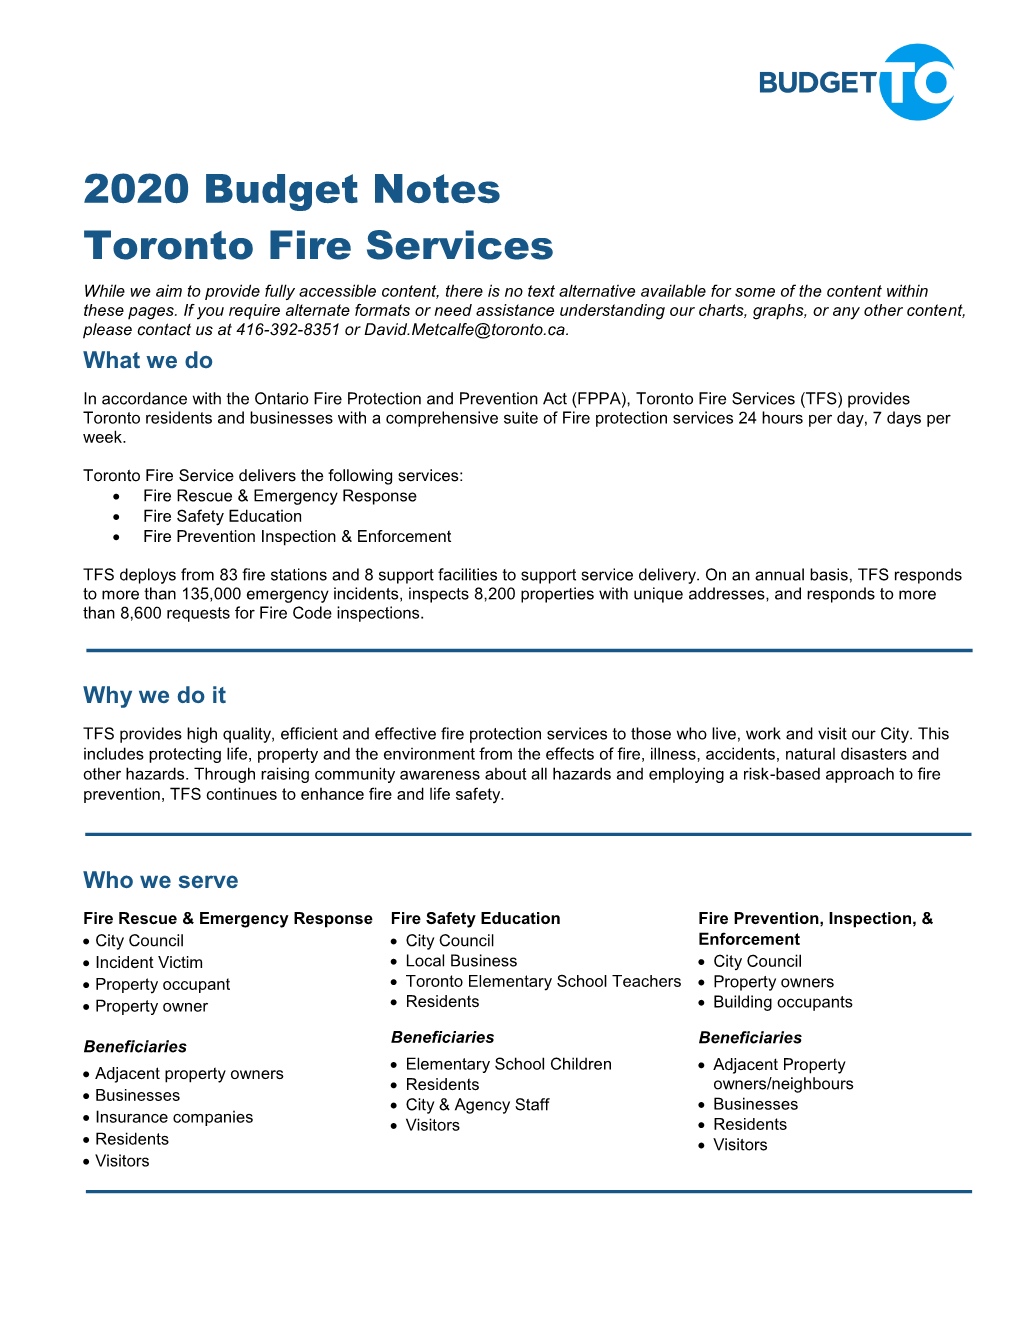 2020 Budget Notes Toronto Fire Services